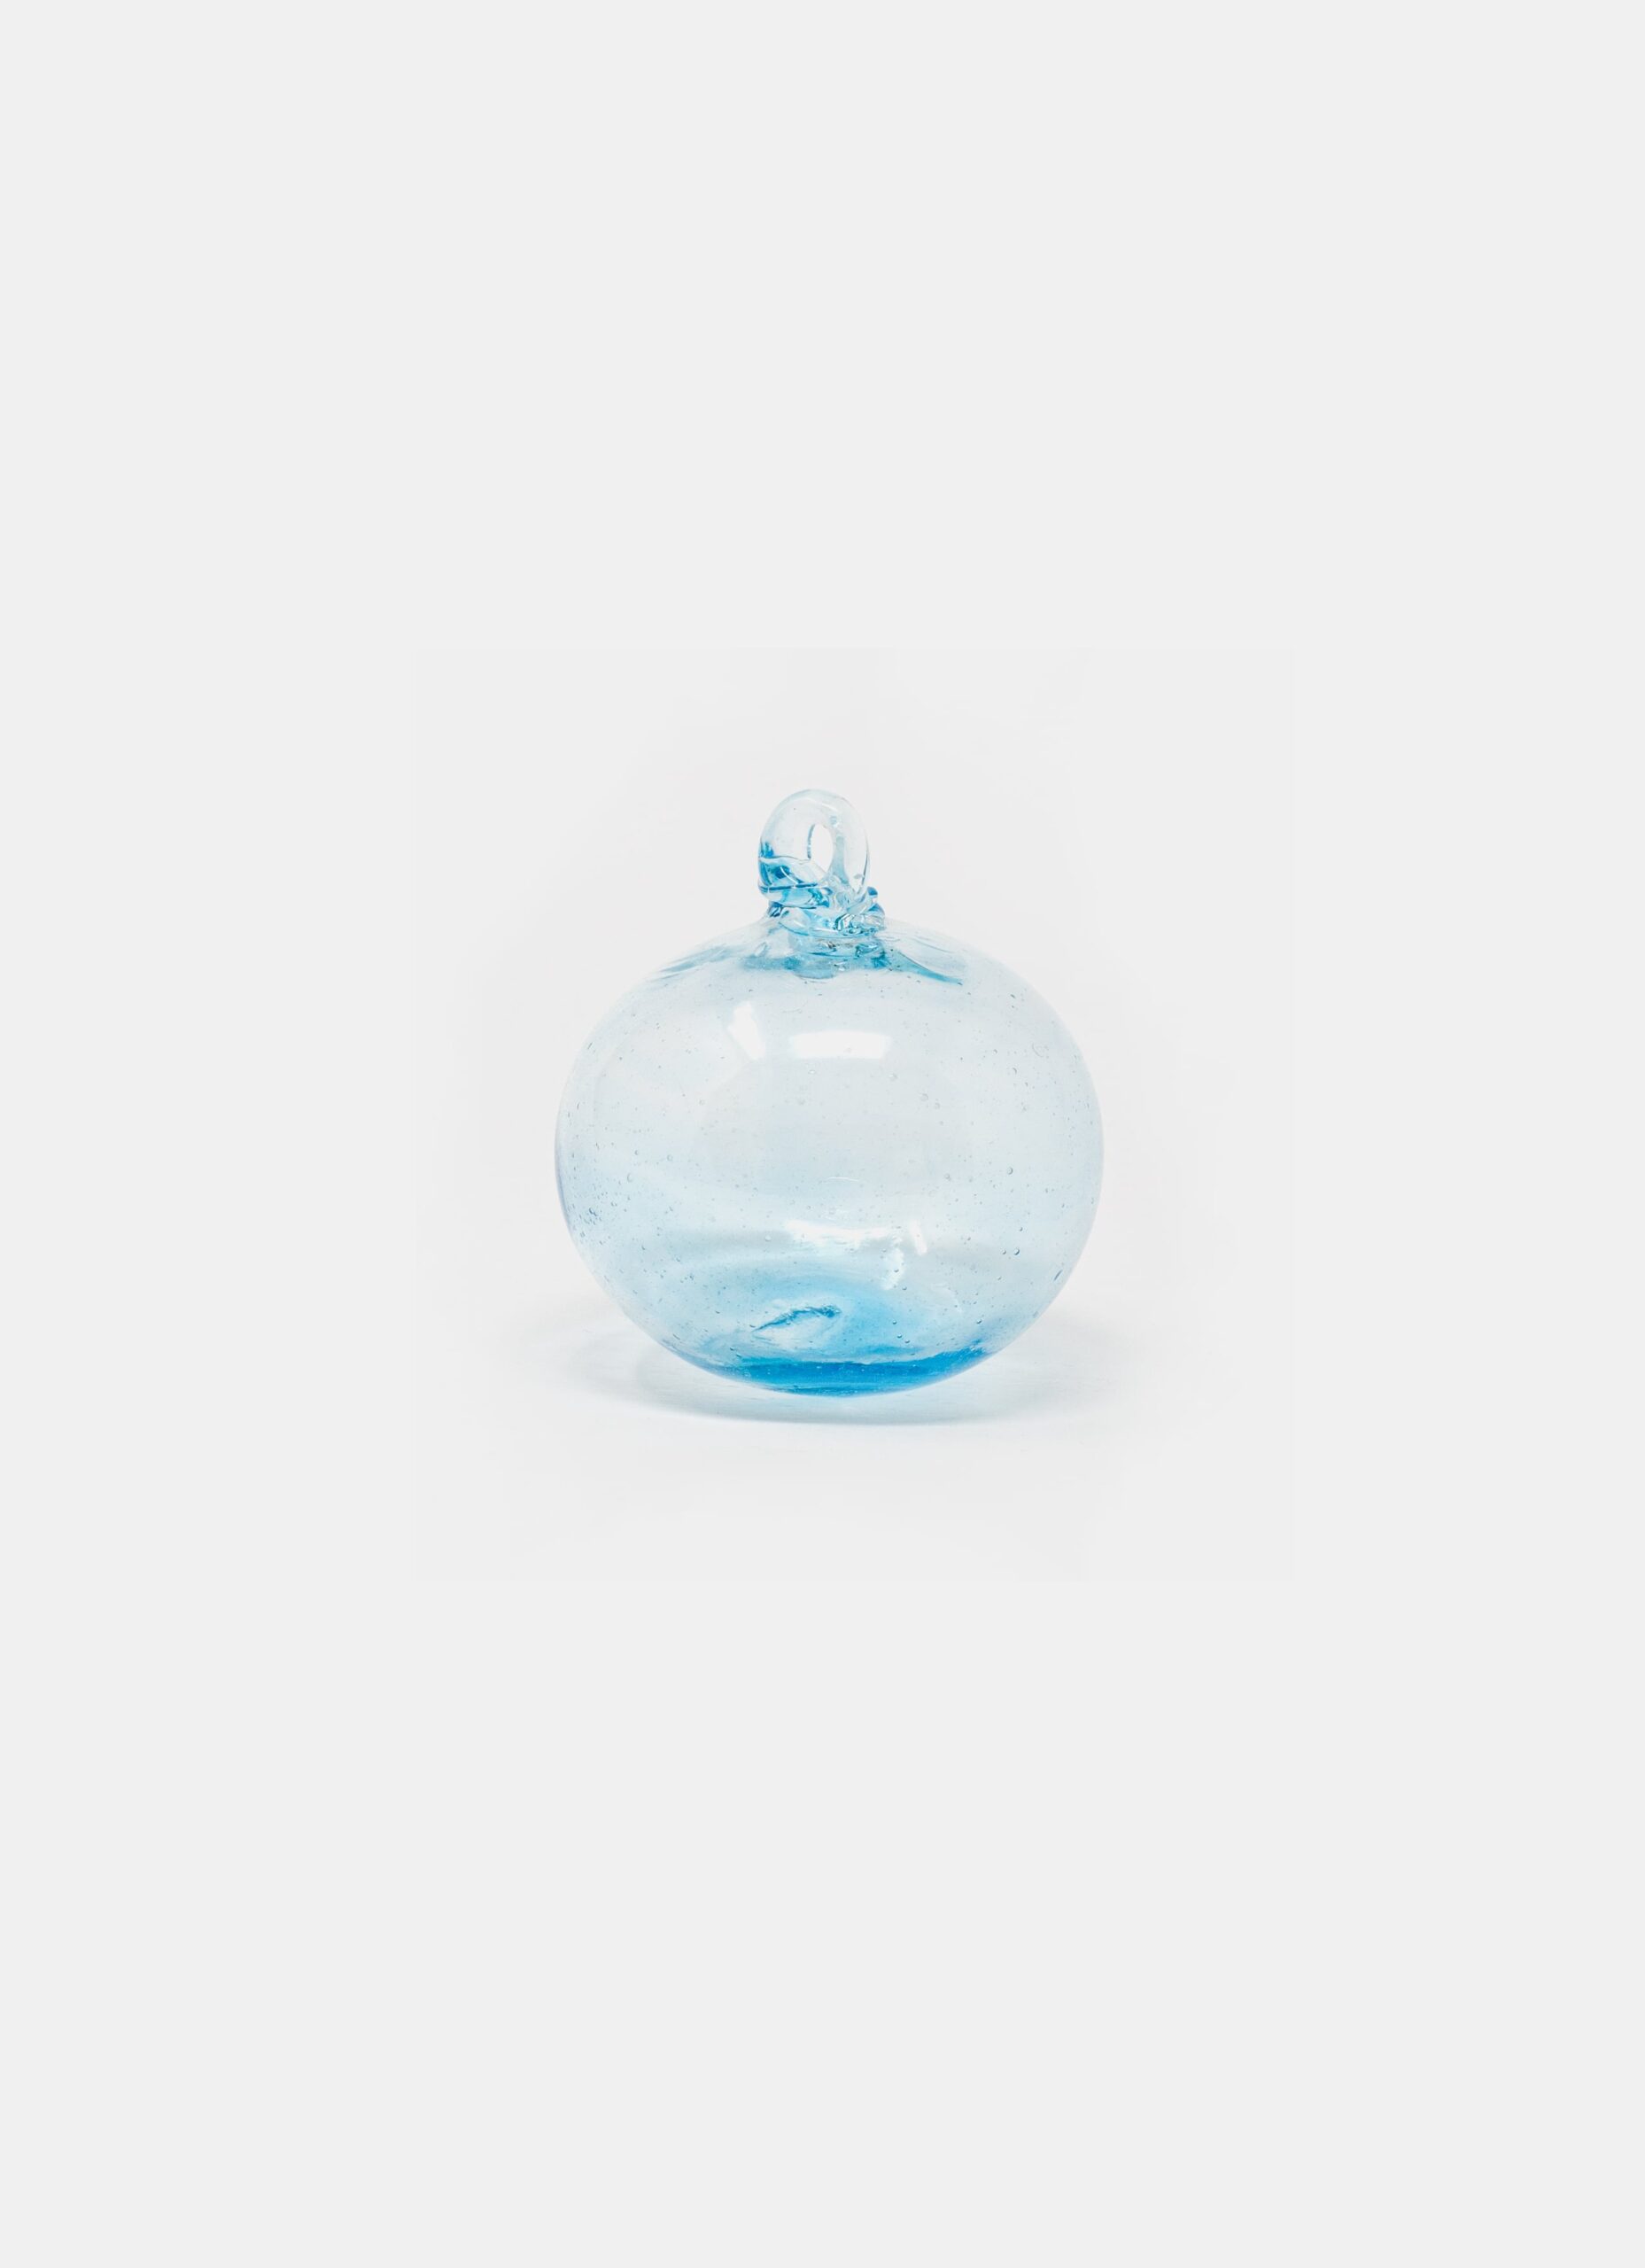 La Soufflerie - Hand-blown recycled Glass - Boule Petit - Christmas Ornament - Turquoise